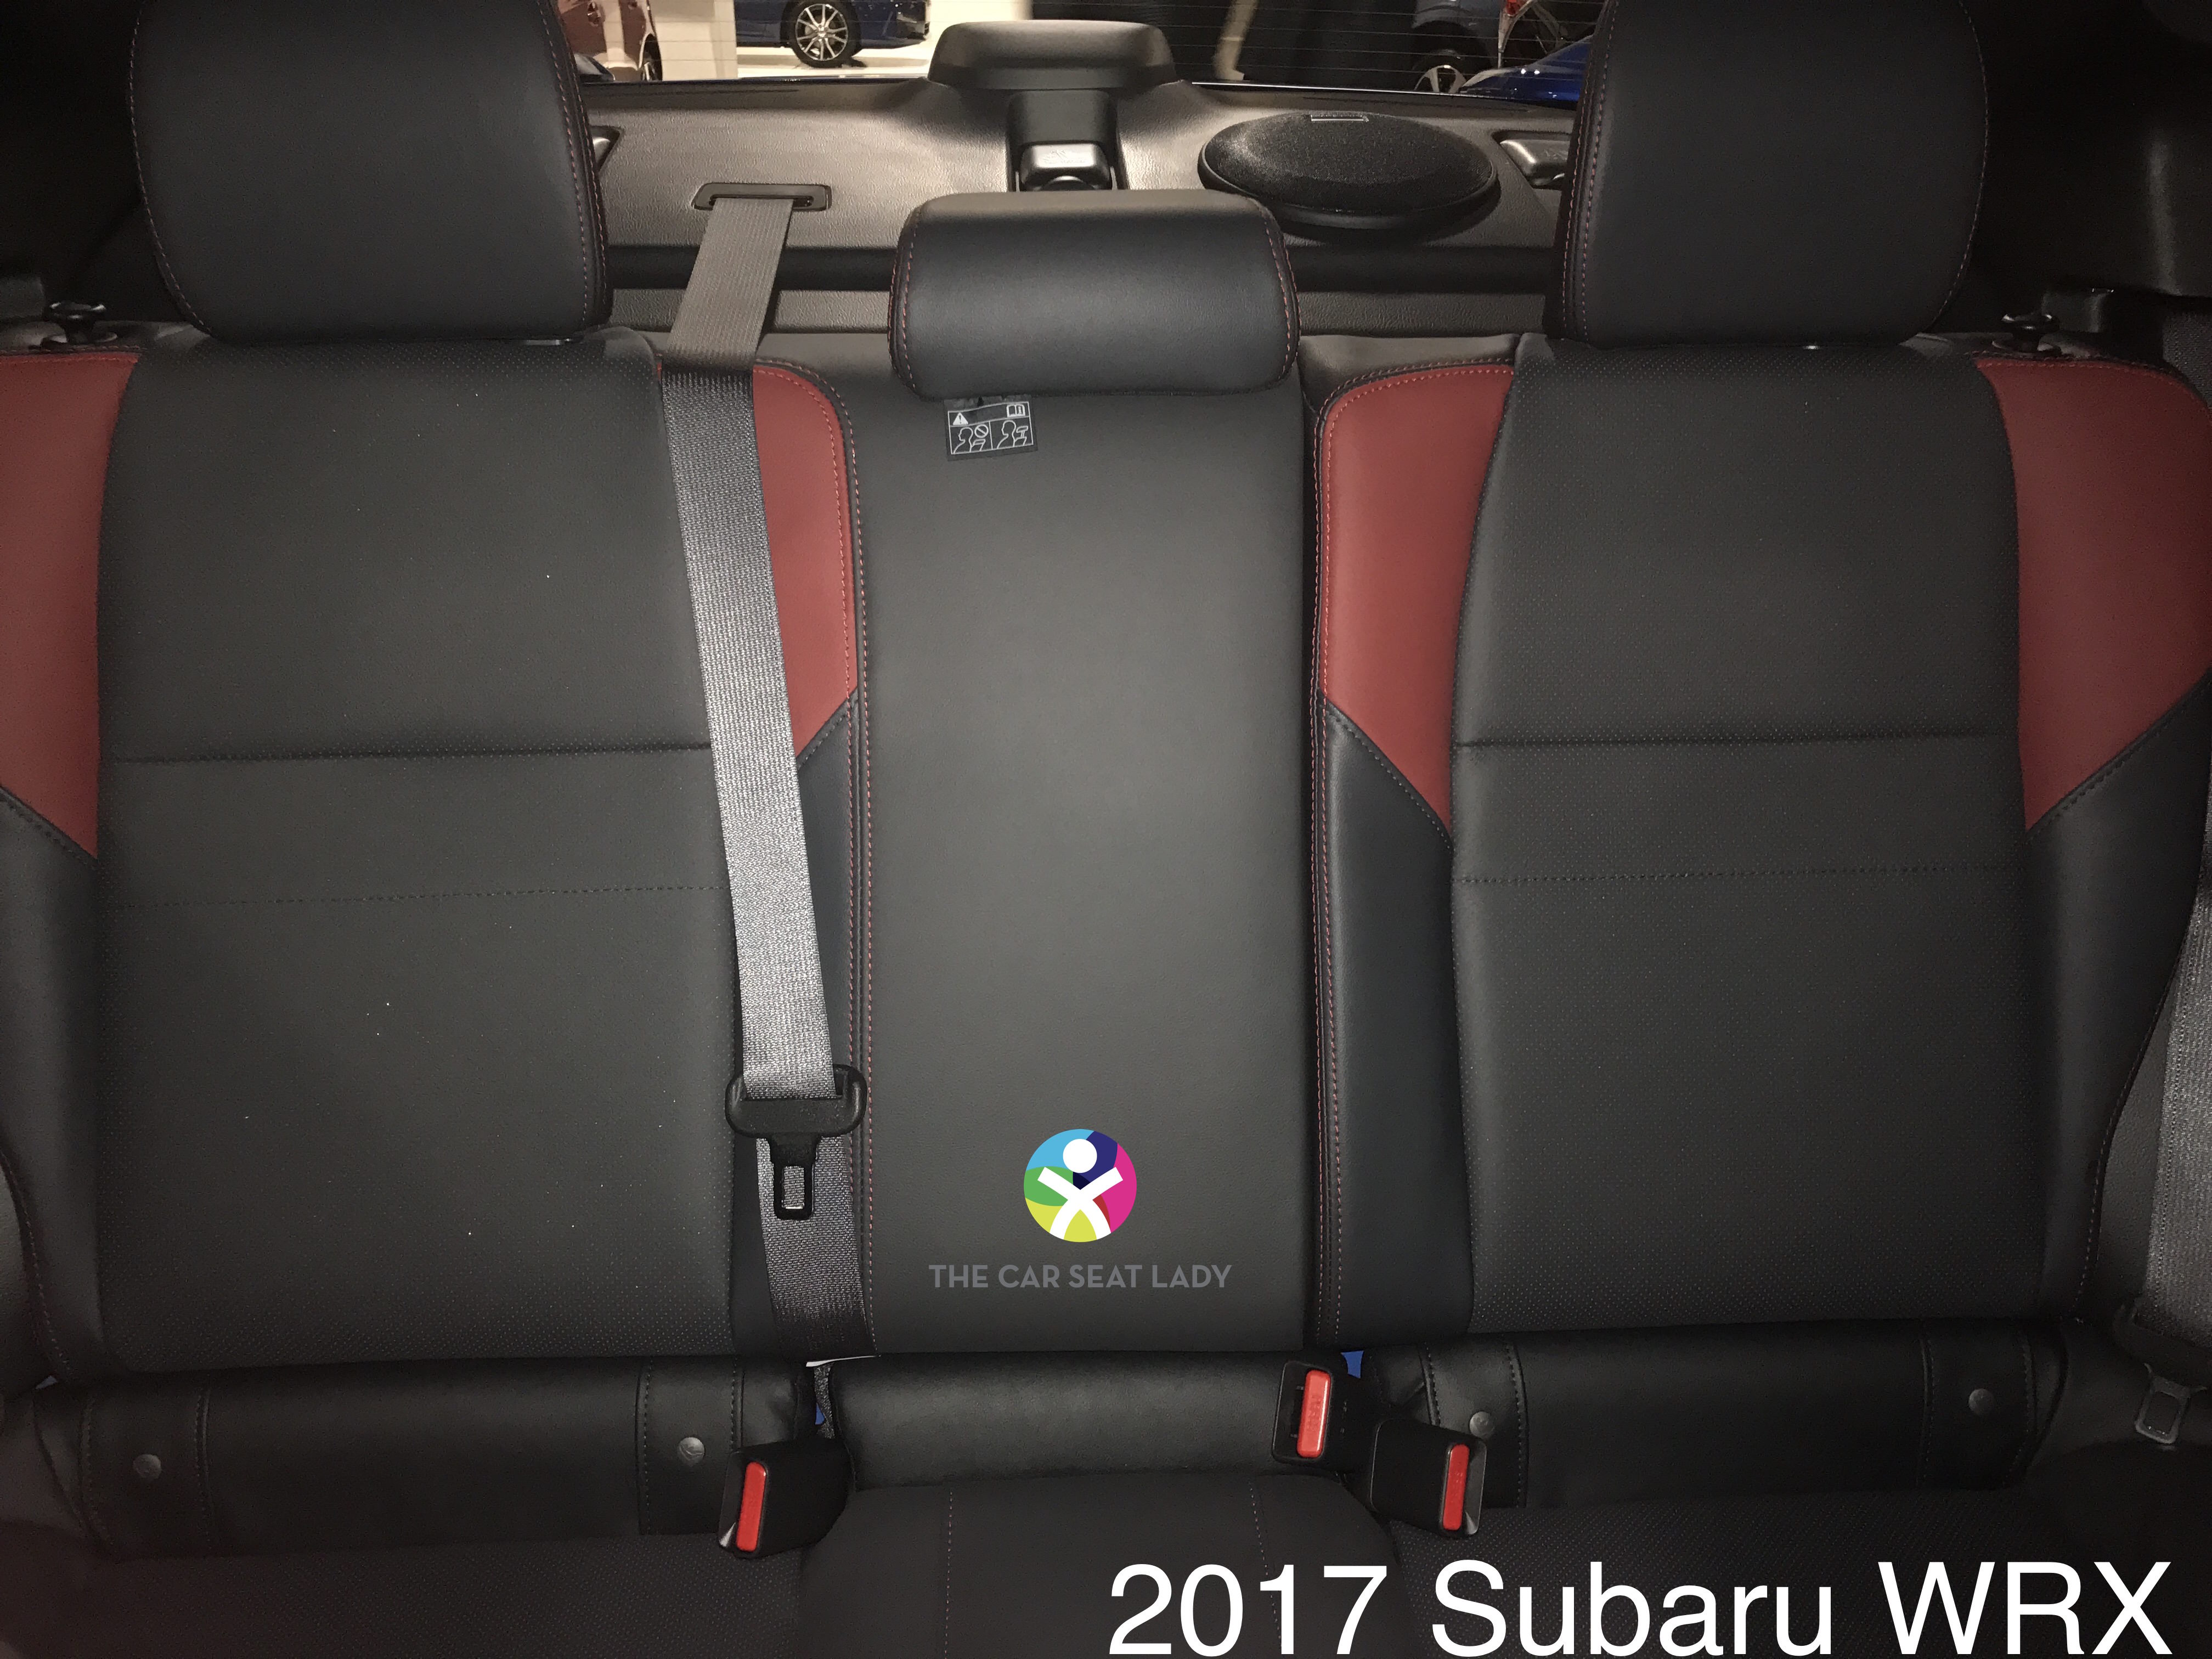 https://thecarseatlady.com/wp-content/uploads/2017/04/2017-Subaru-WRX-frontal.jpg